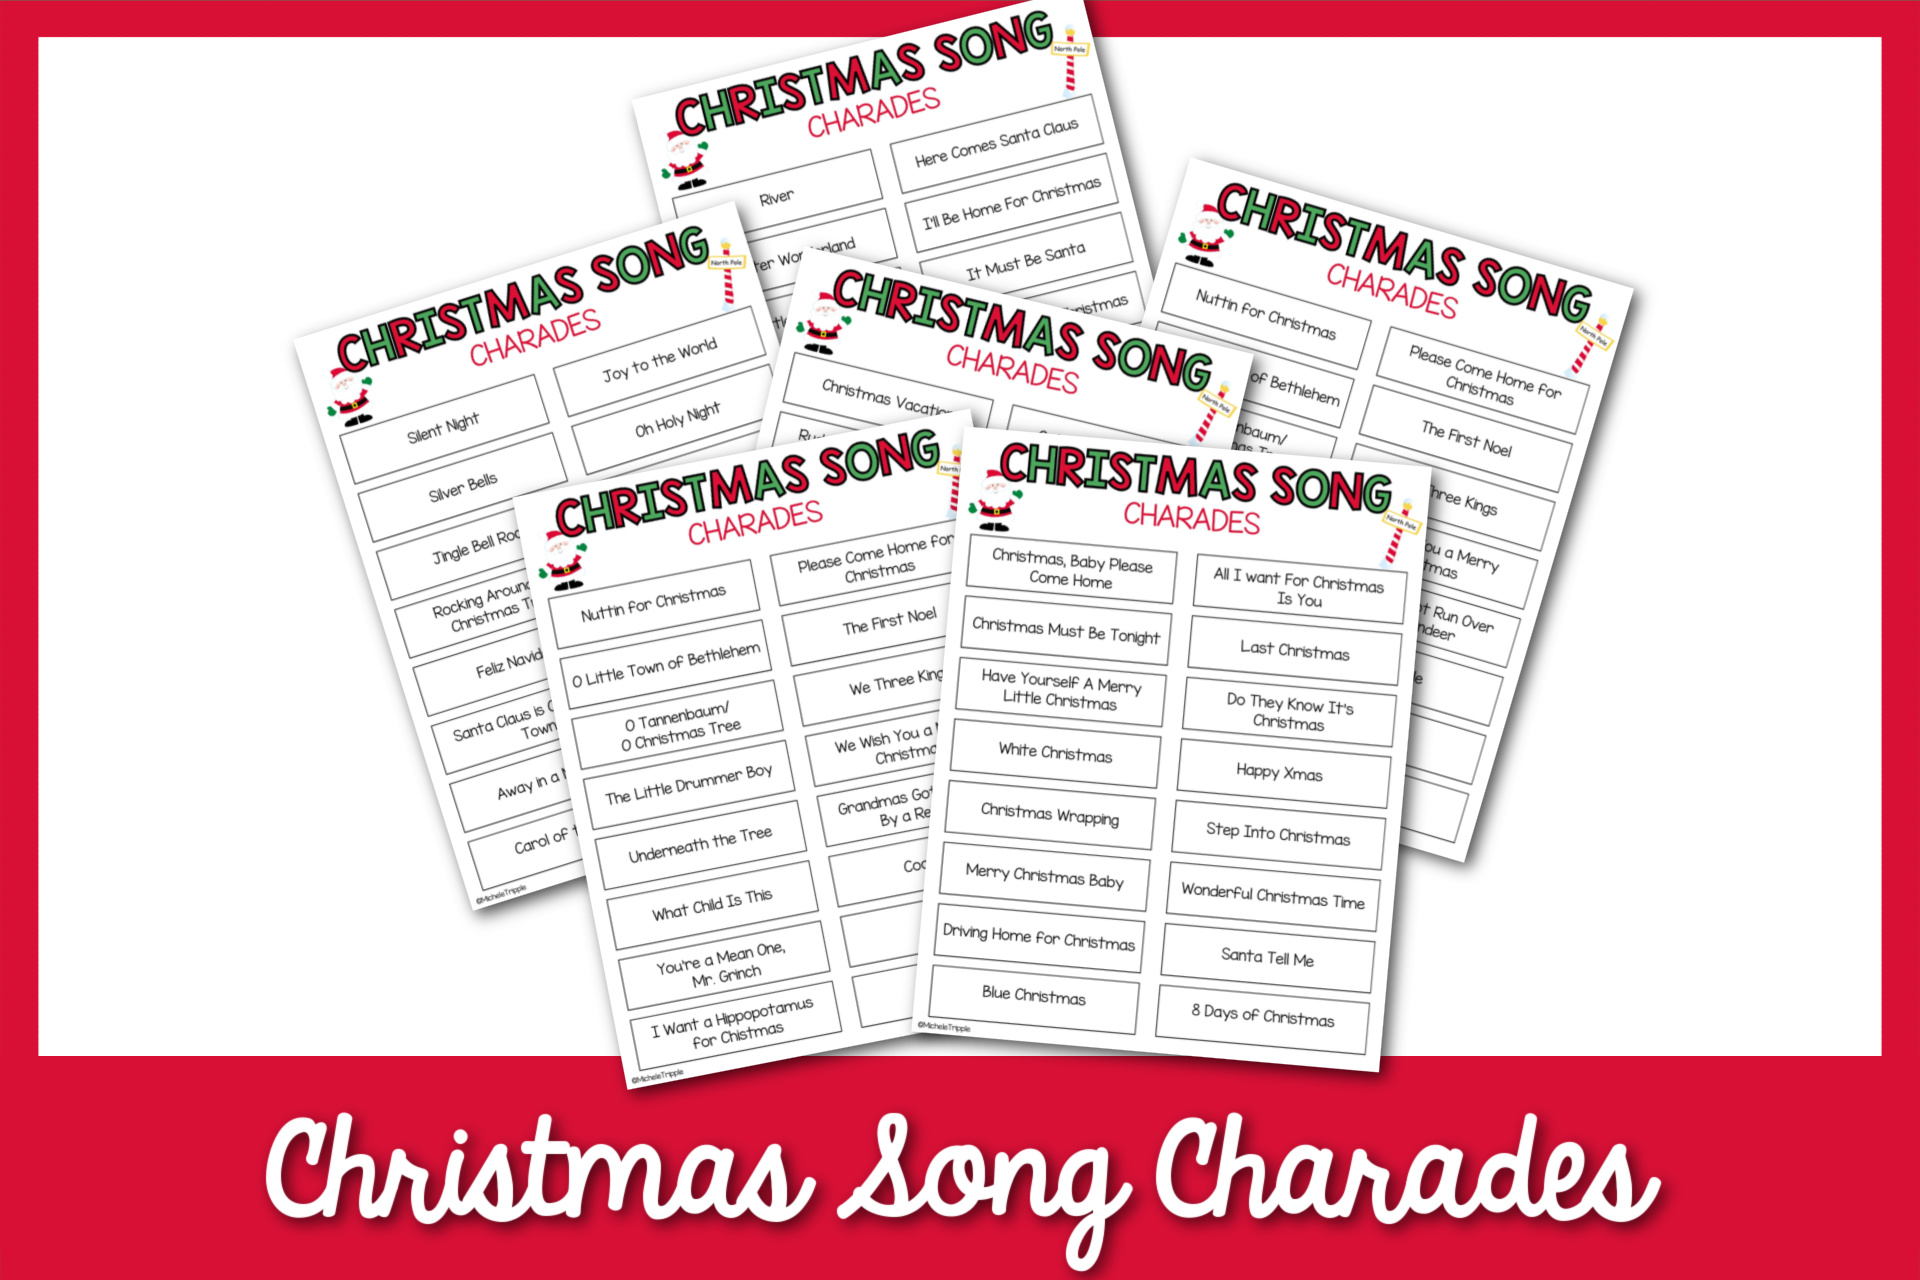 Christmas song charades